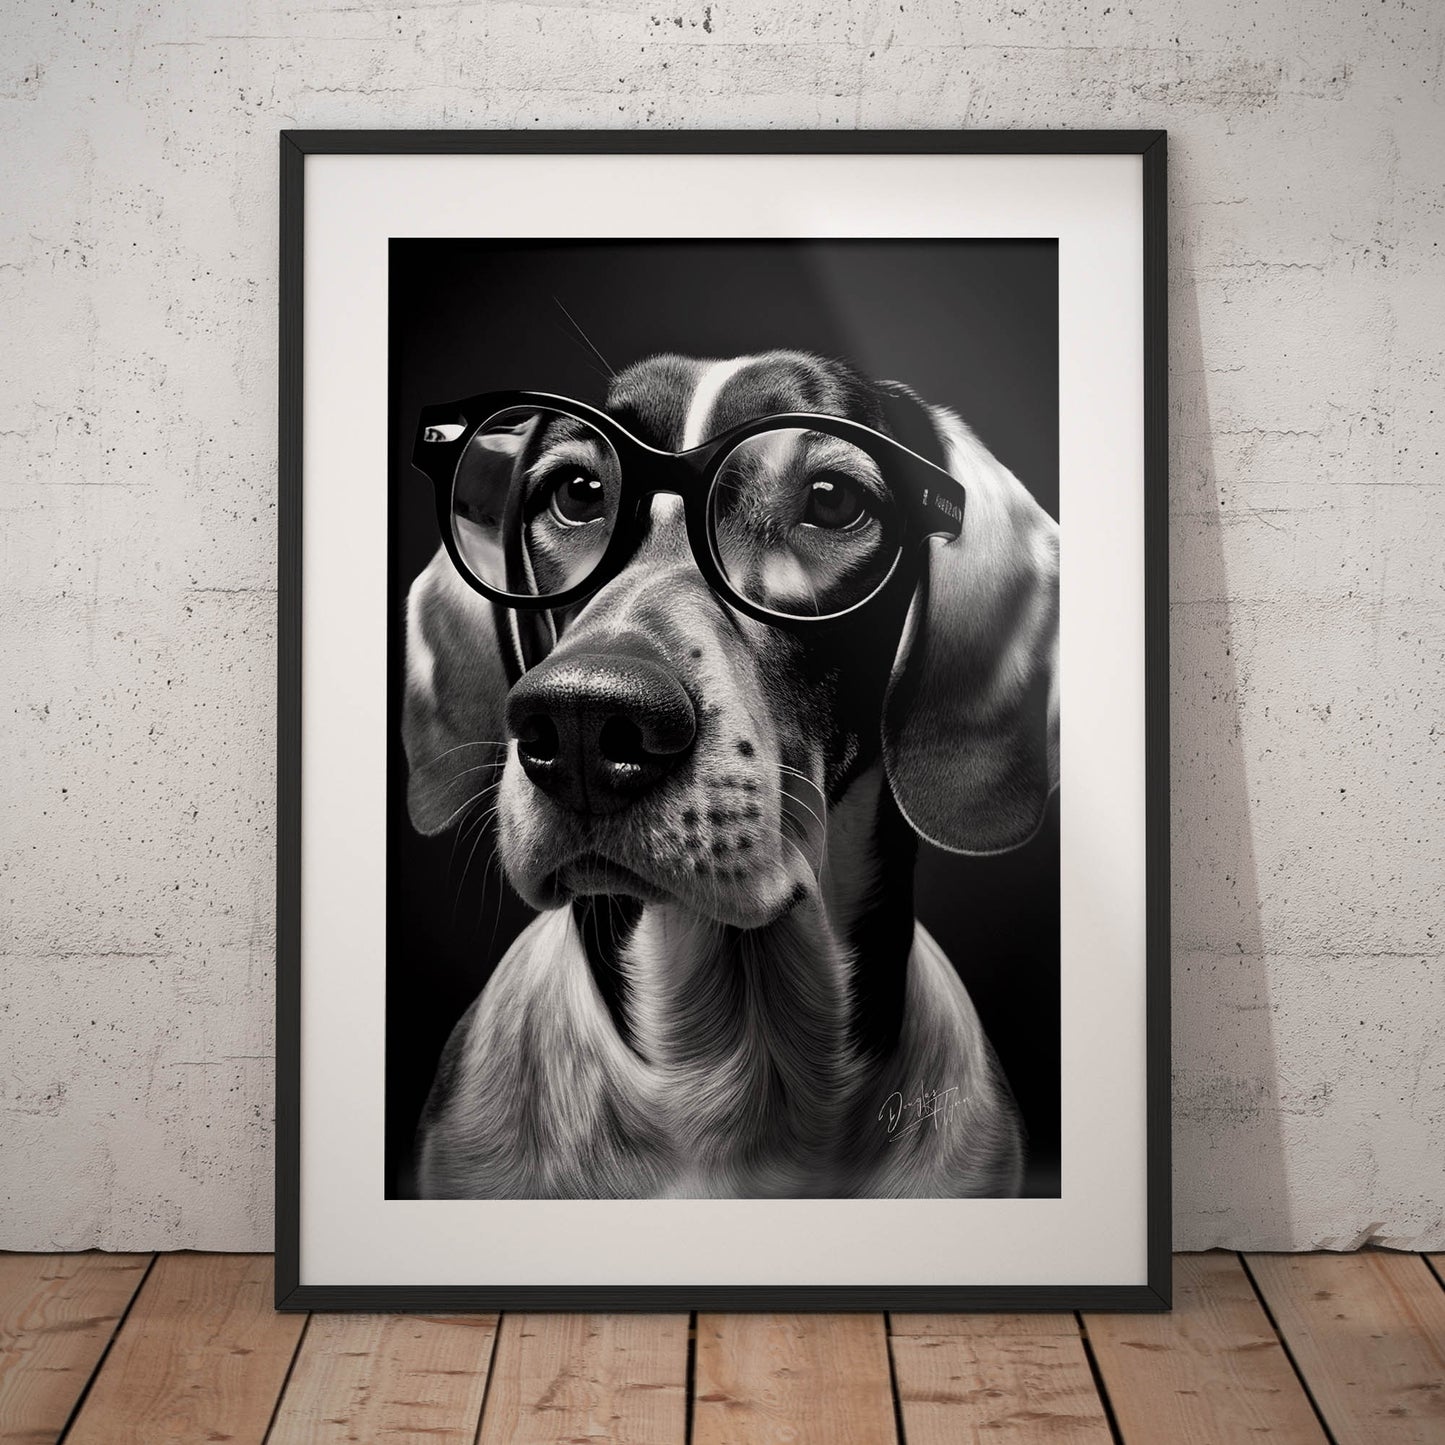 »Pup in Glasses« retro poster